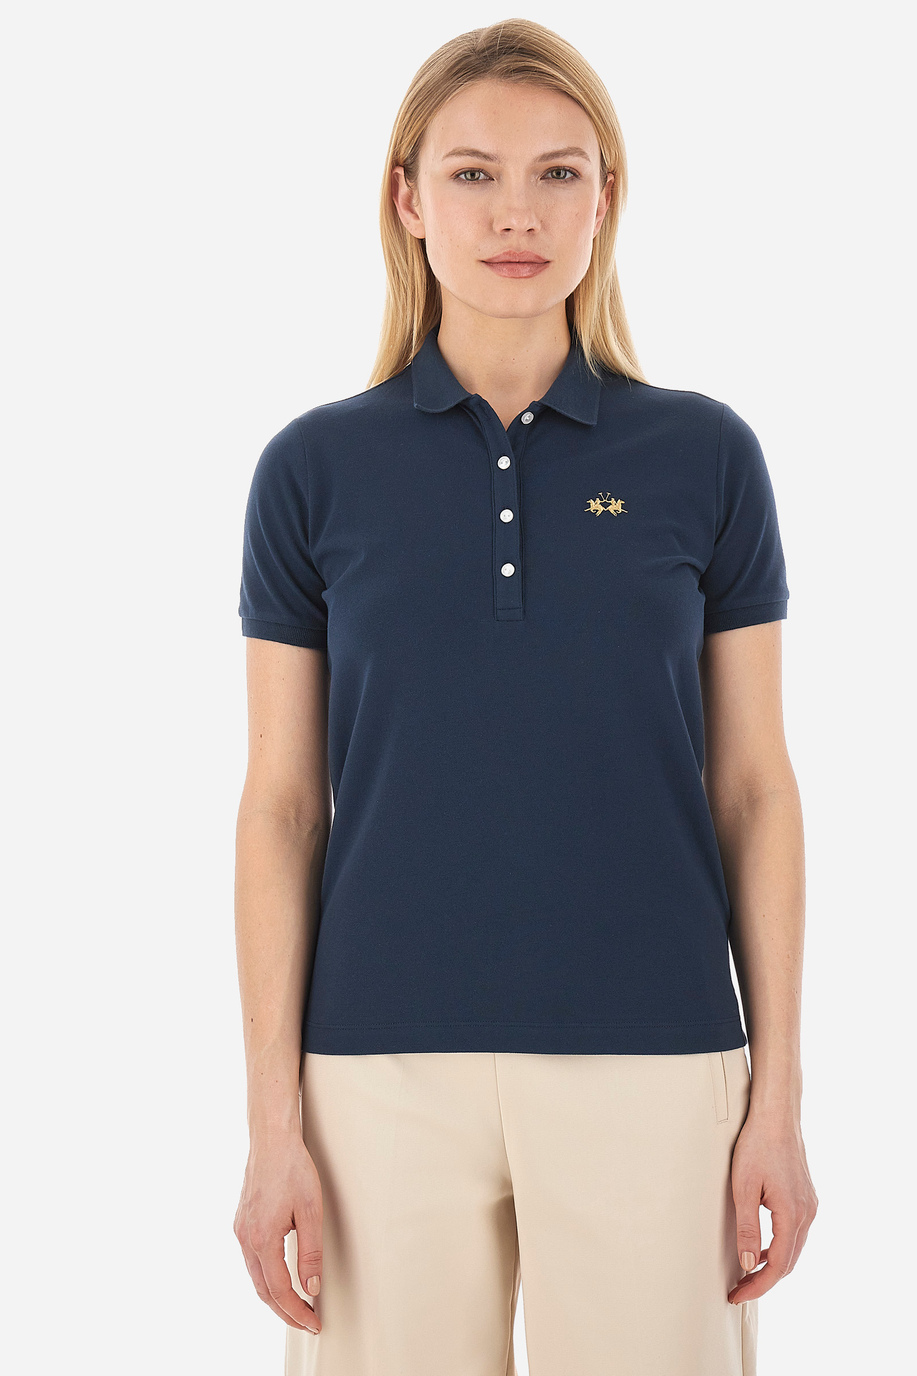 Women's polo shirt in a regular fit - Amalia | La Martina - Official Online Shop